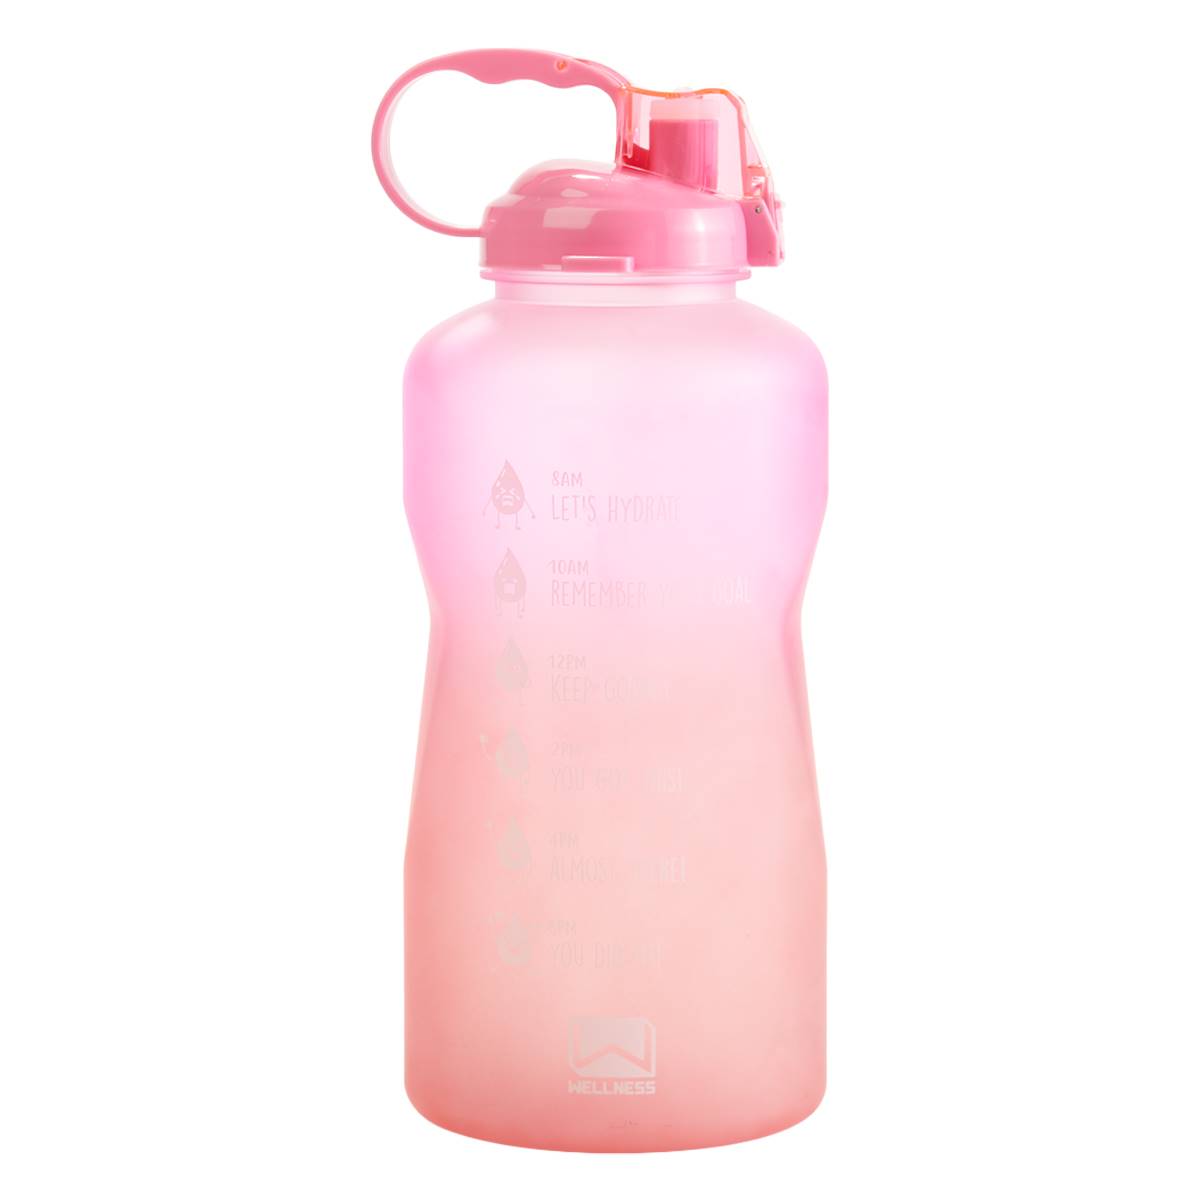 Wellness 1-Gallon Sports Bottle - Rosebloom